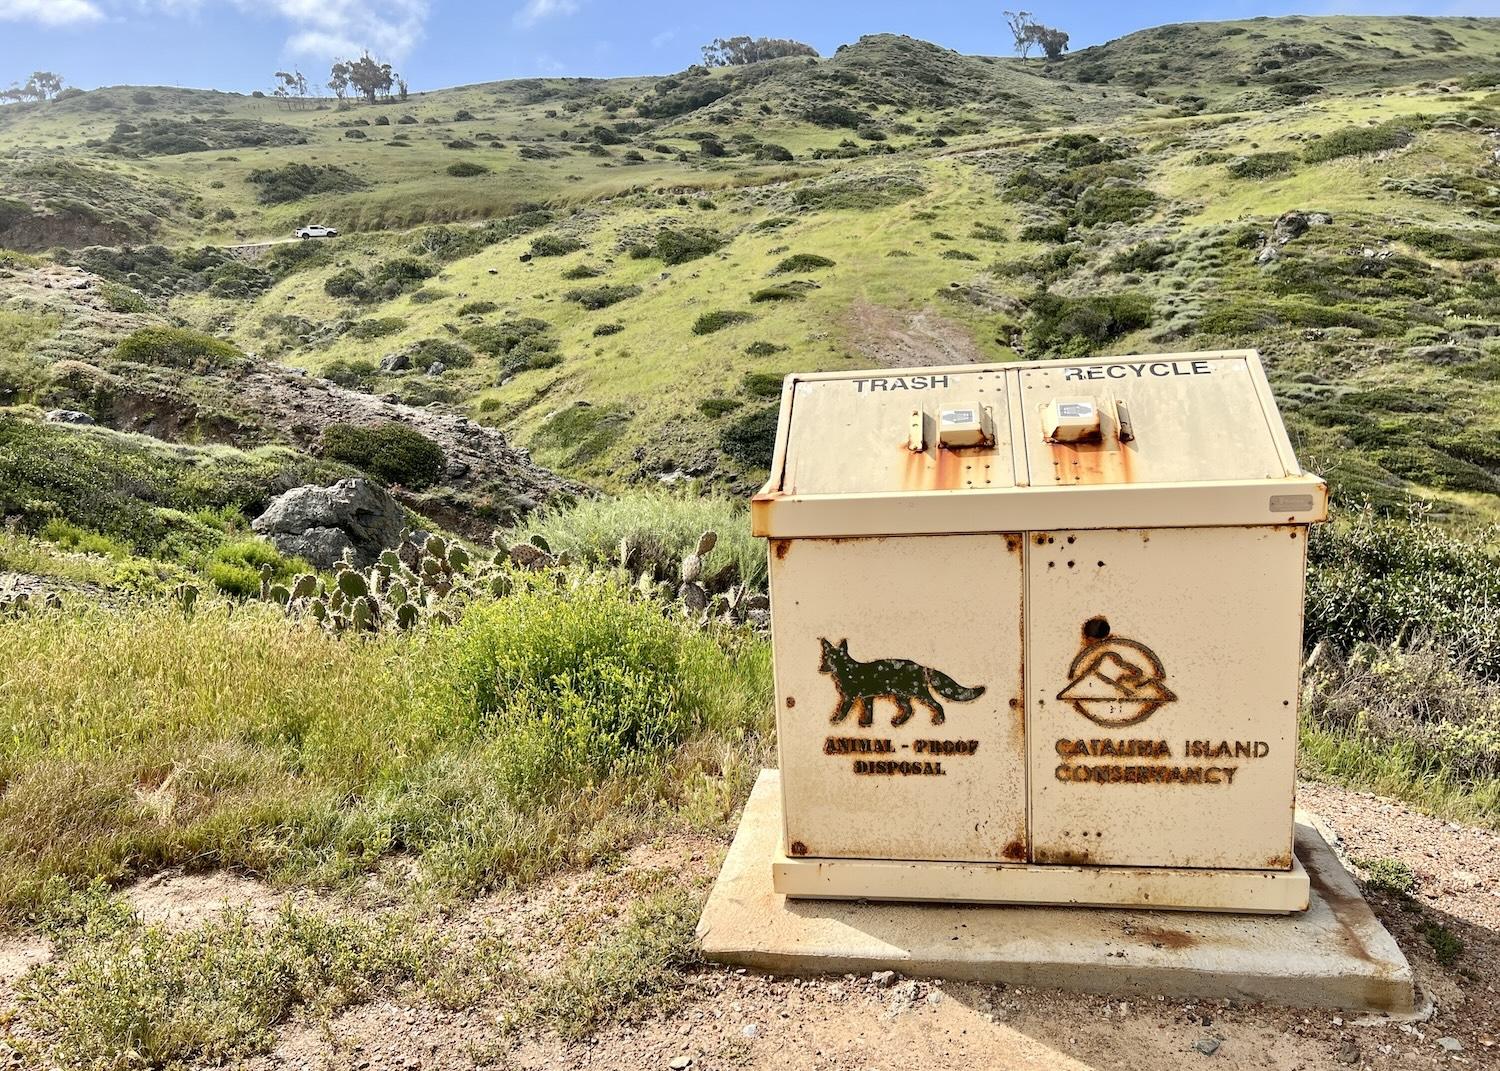 Fox-proof trash bins can be found on Catalina Island.